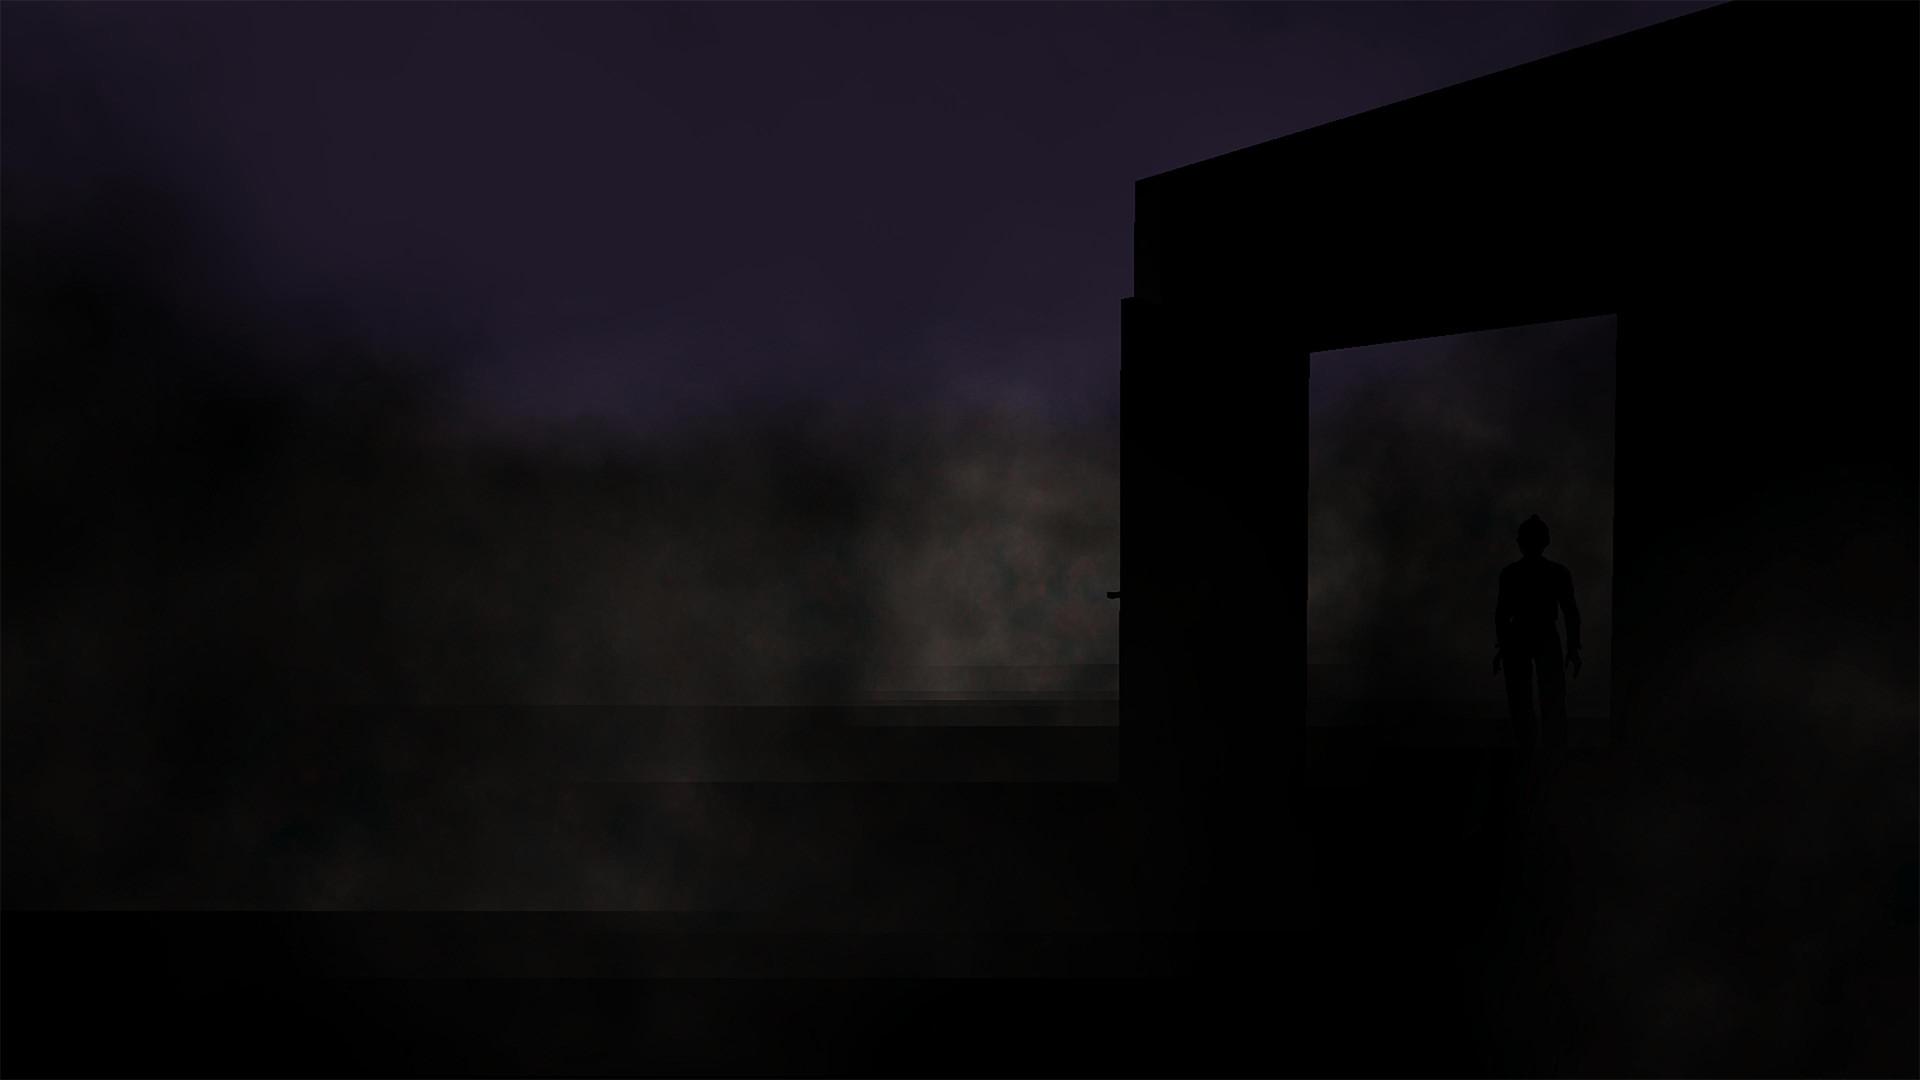 Screenshot №9 from game Resurgence